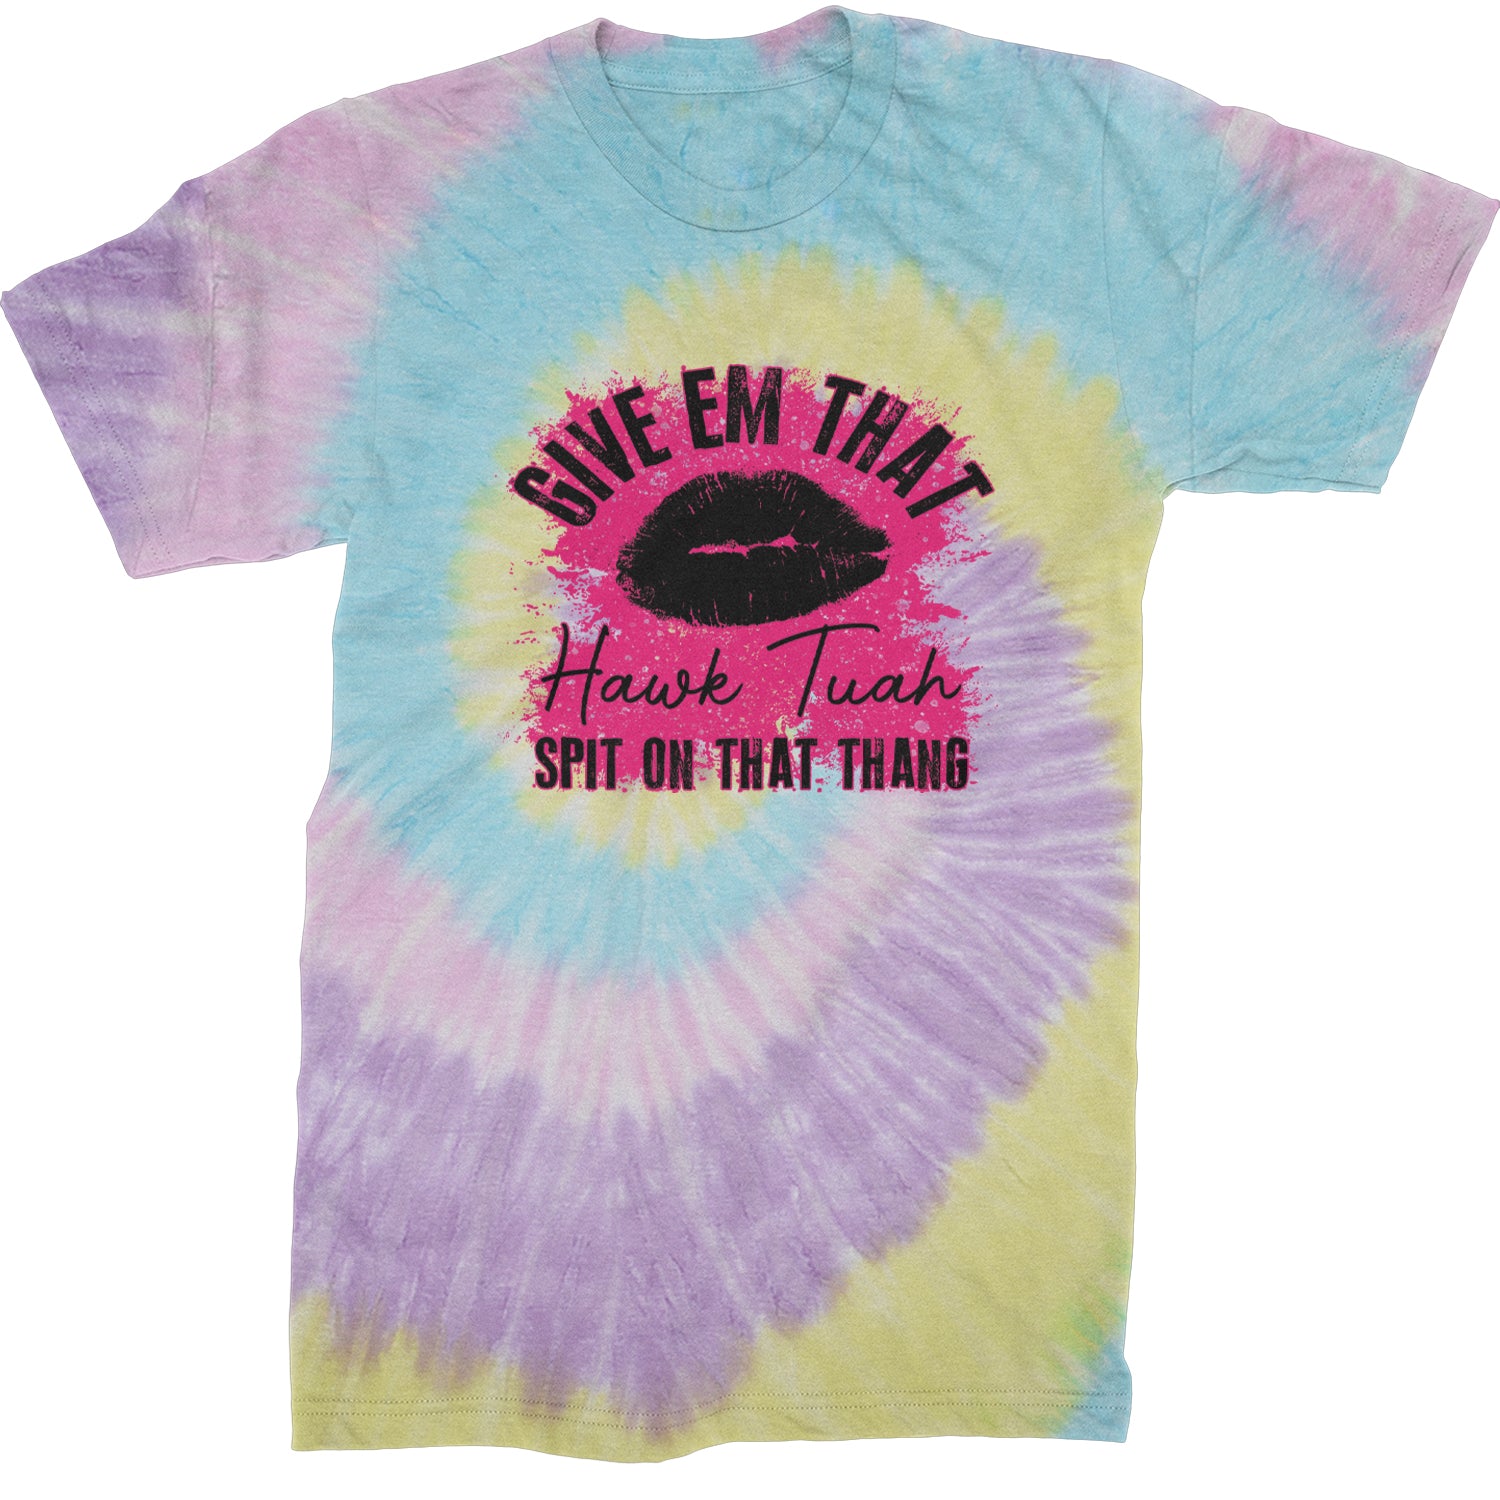 Give 'Em Hawk Tuah Spit On That Thang Mens T-shirt Tie-Dye Jellybean